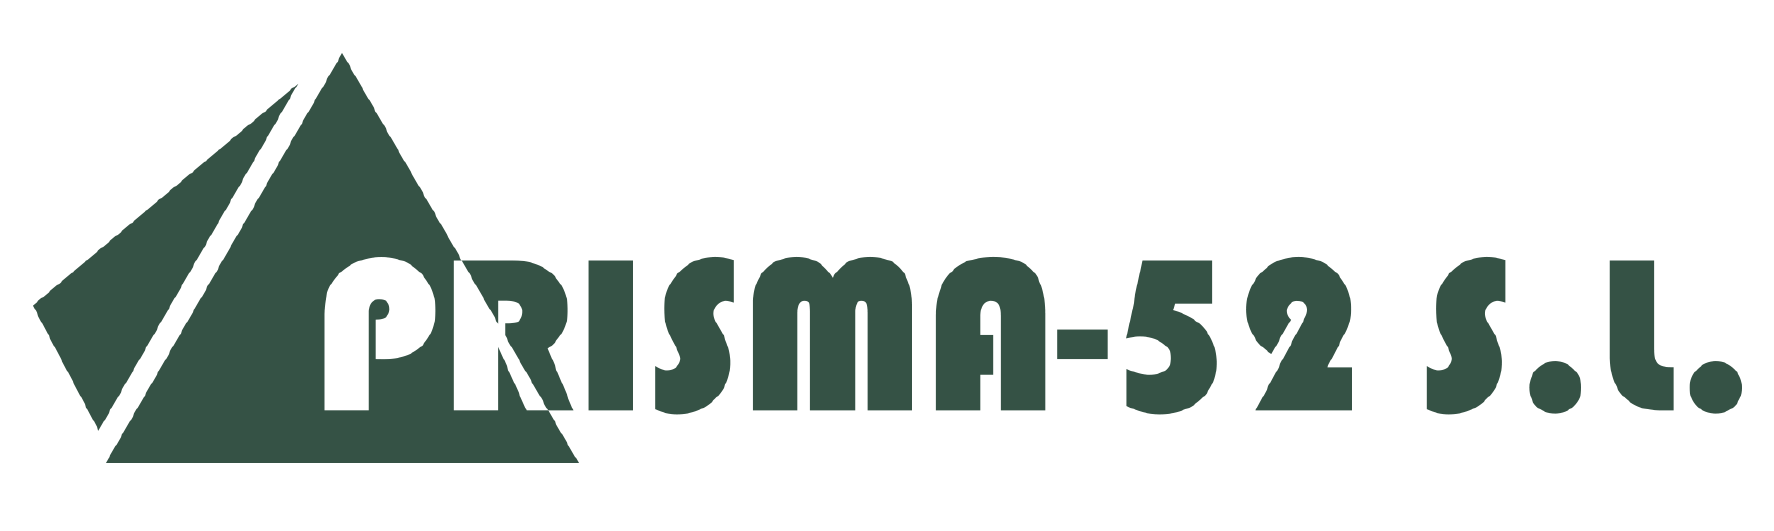 Prisma52